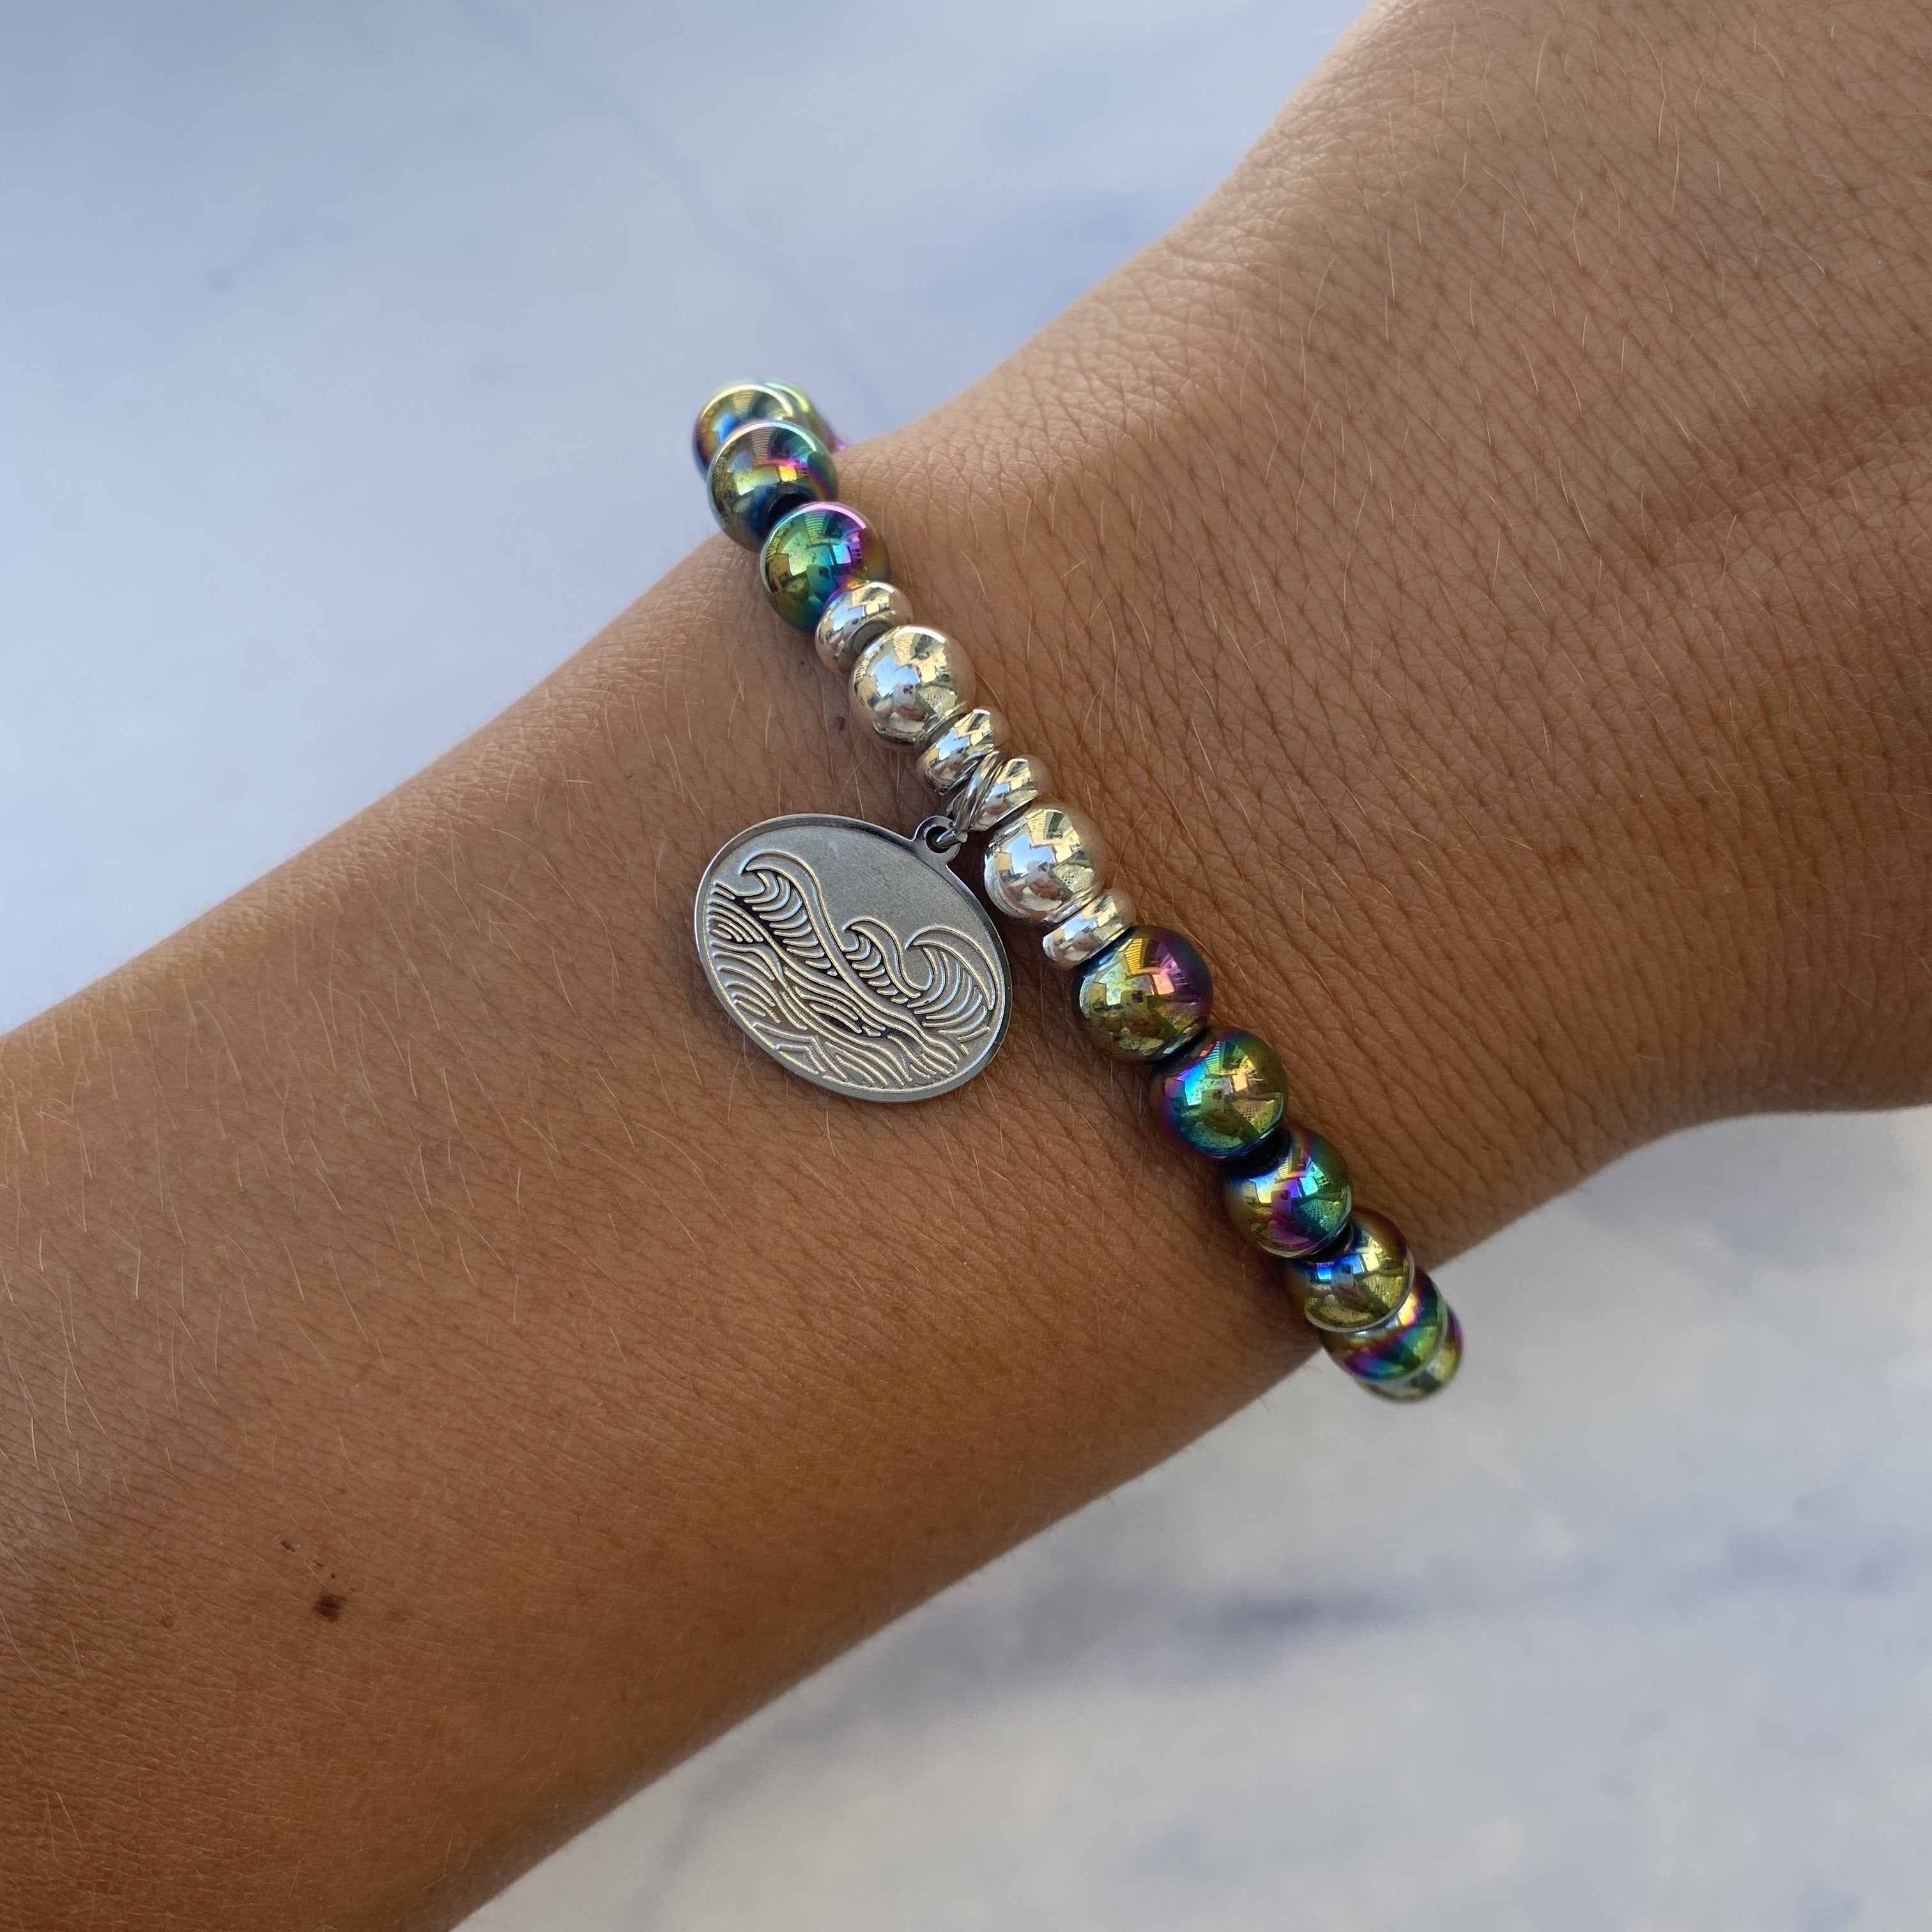 wave charm with rainbow hematite beads charity bracelet 18795413635222